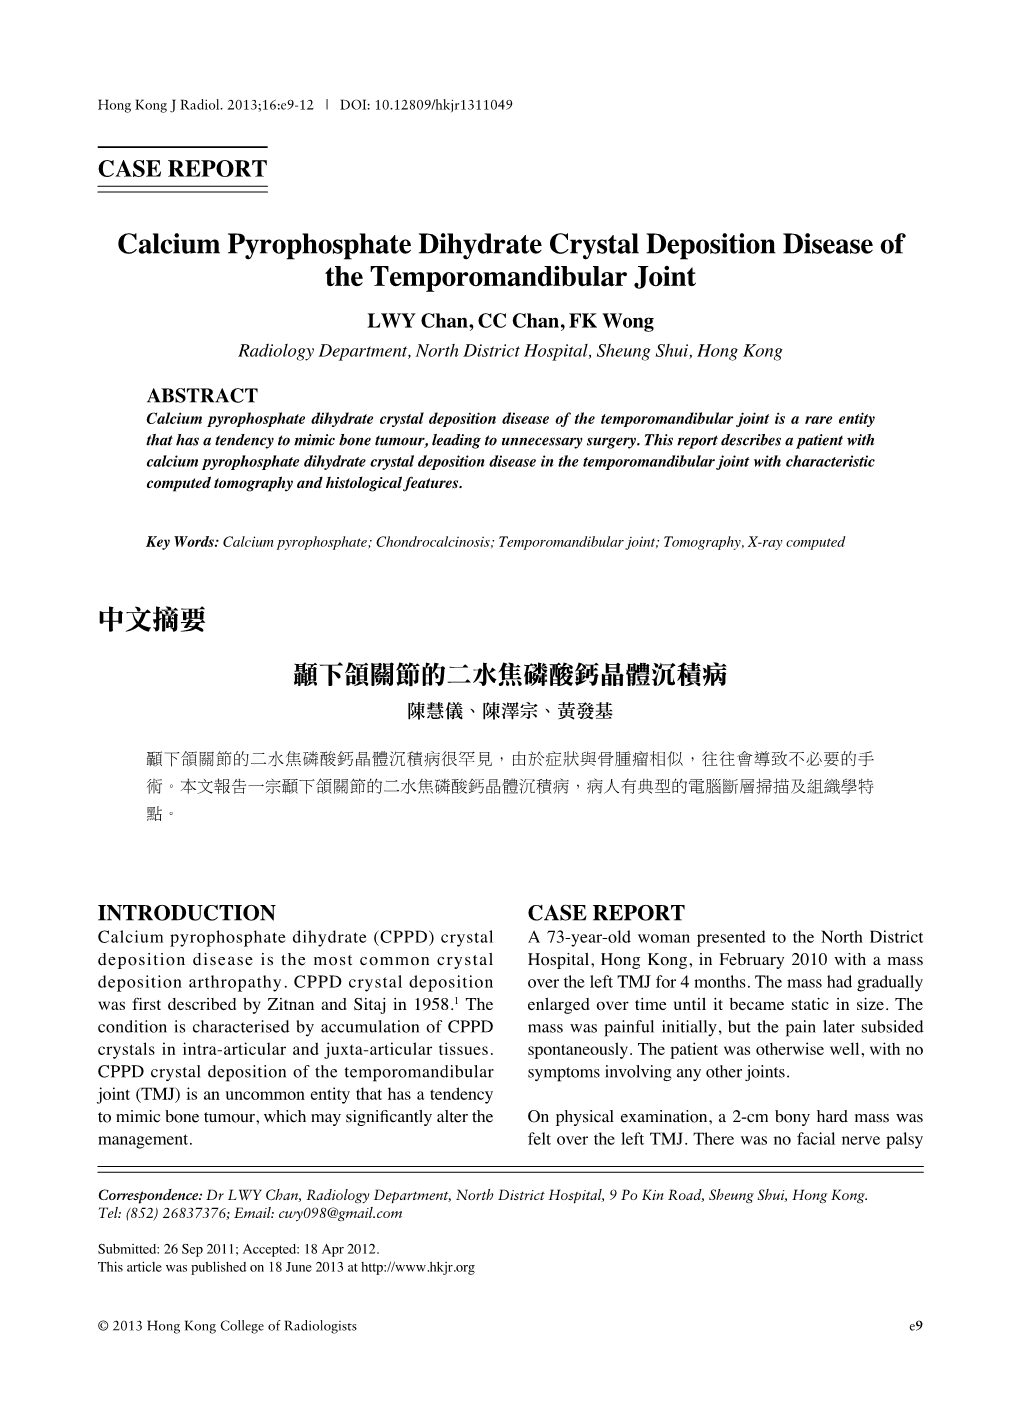 Calcium Pyrophosphate Dihydrate Crystal Deposition Disease of The